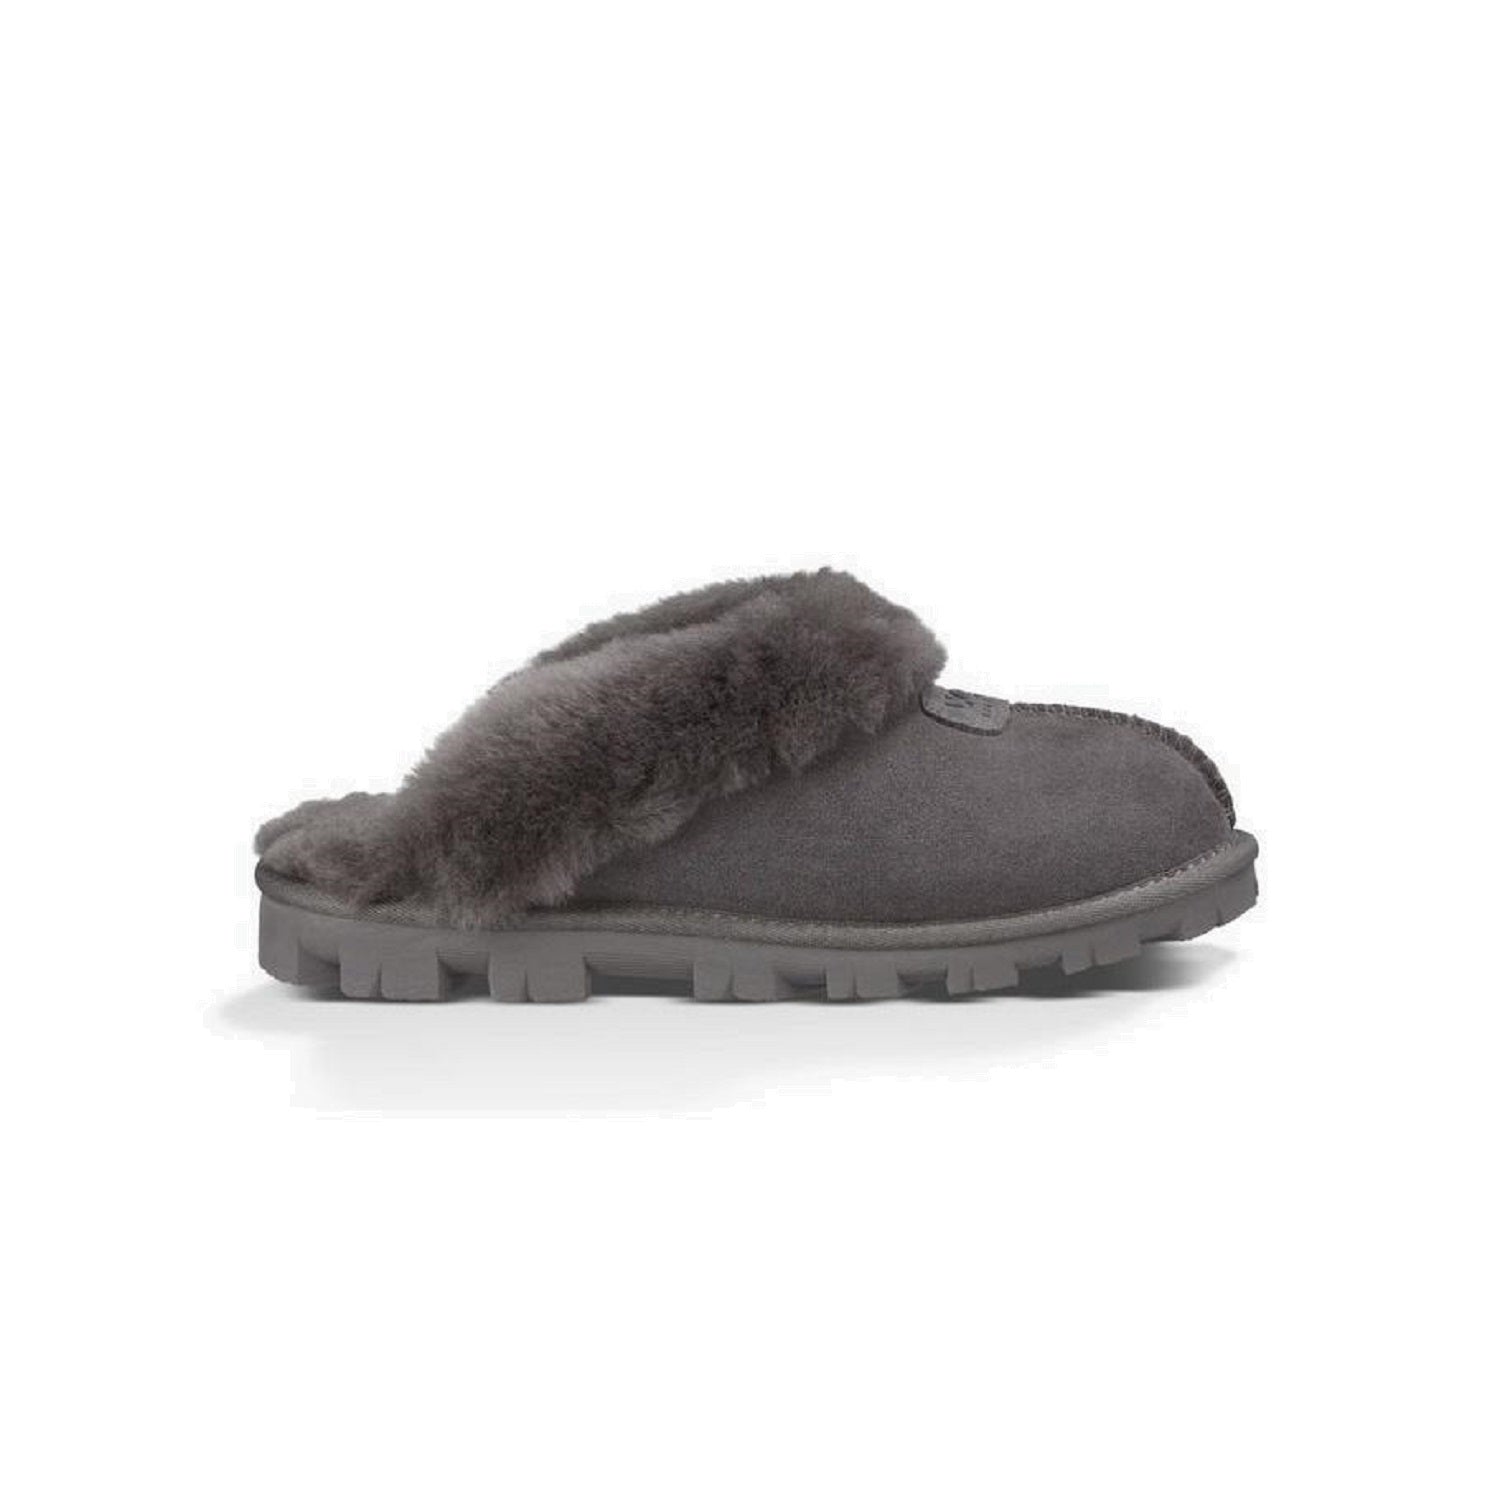 Fluffy closed toe slipper in grey.